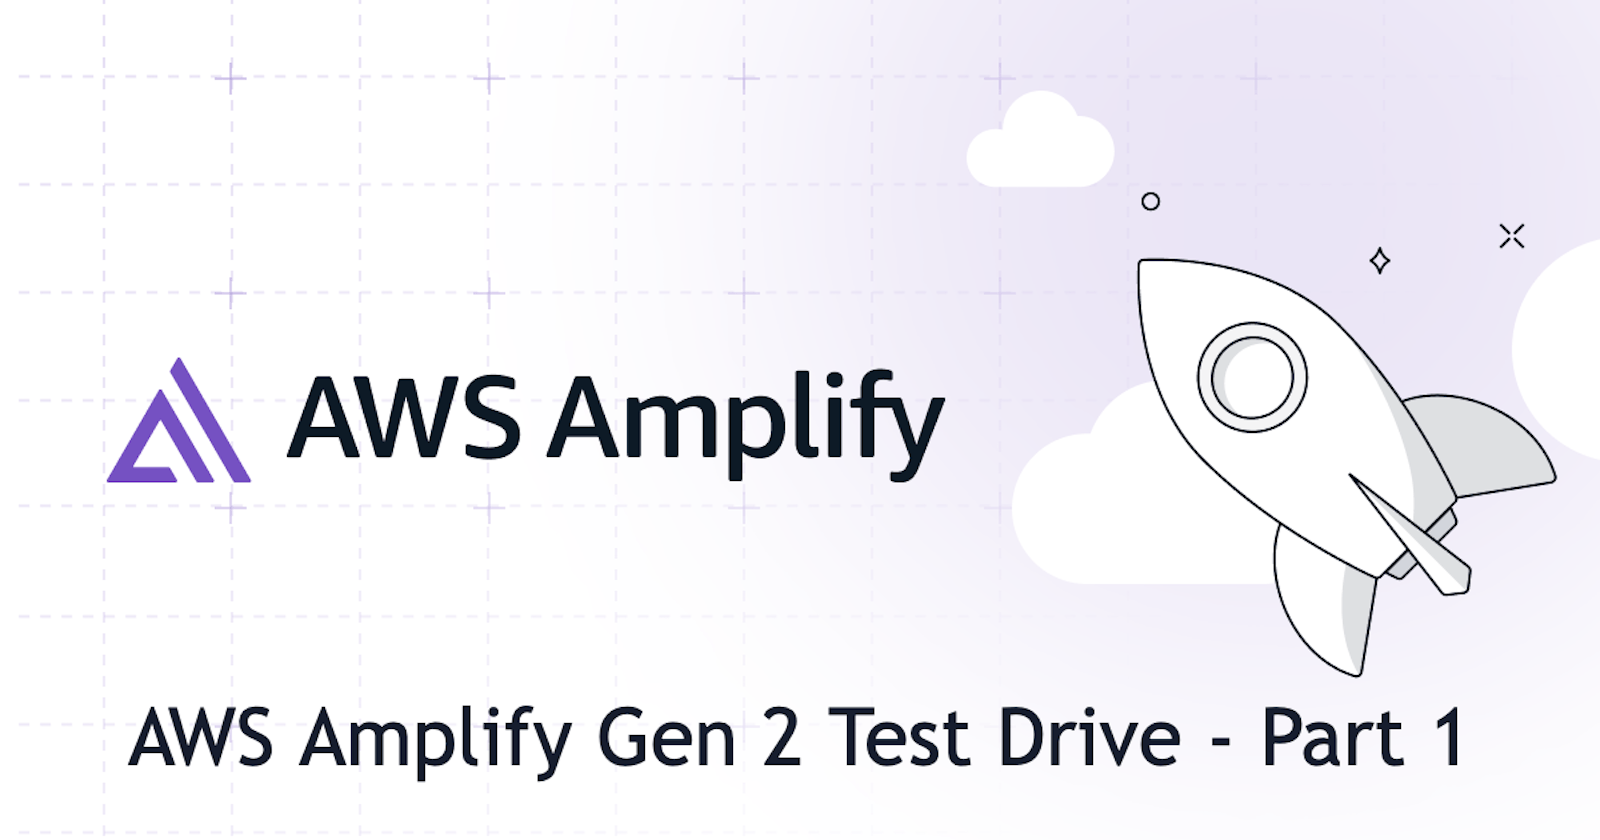 AWS Amplify Gen 2 Test Drive - Part 1